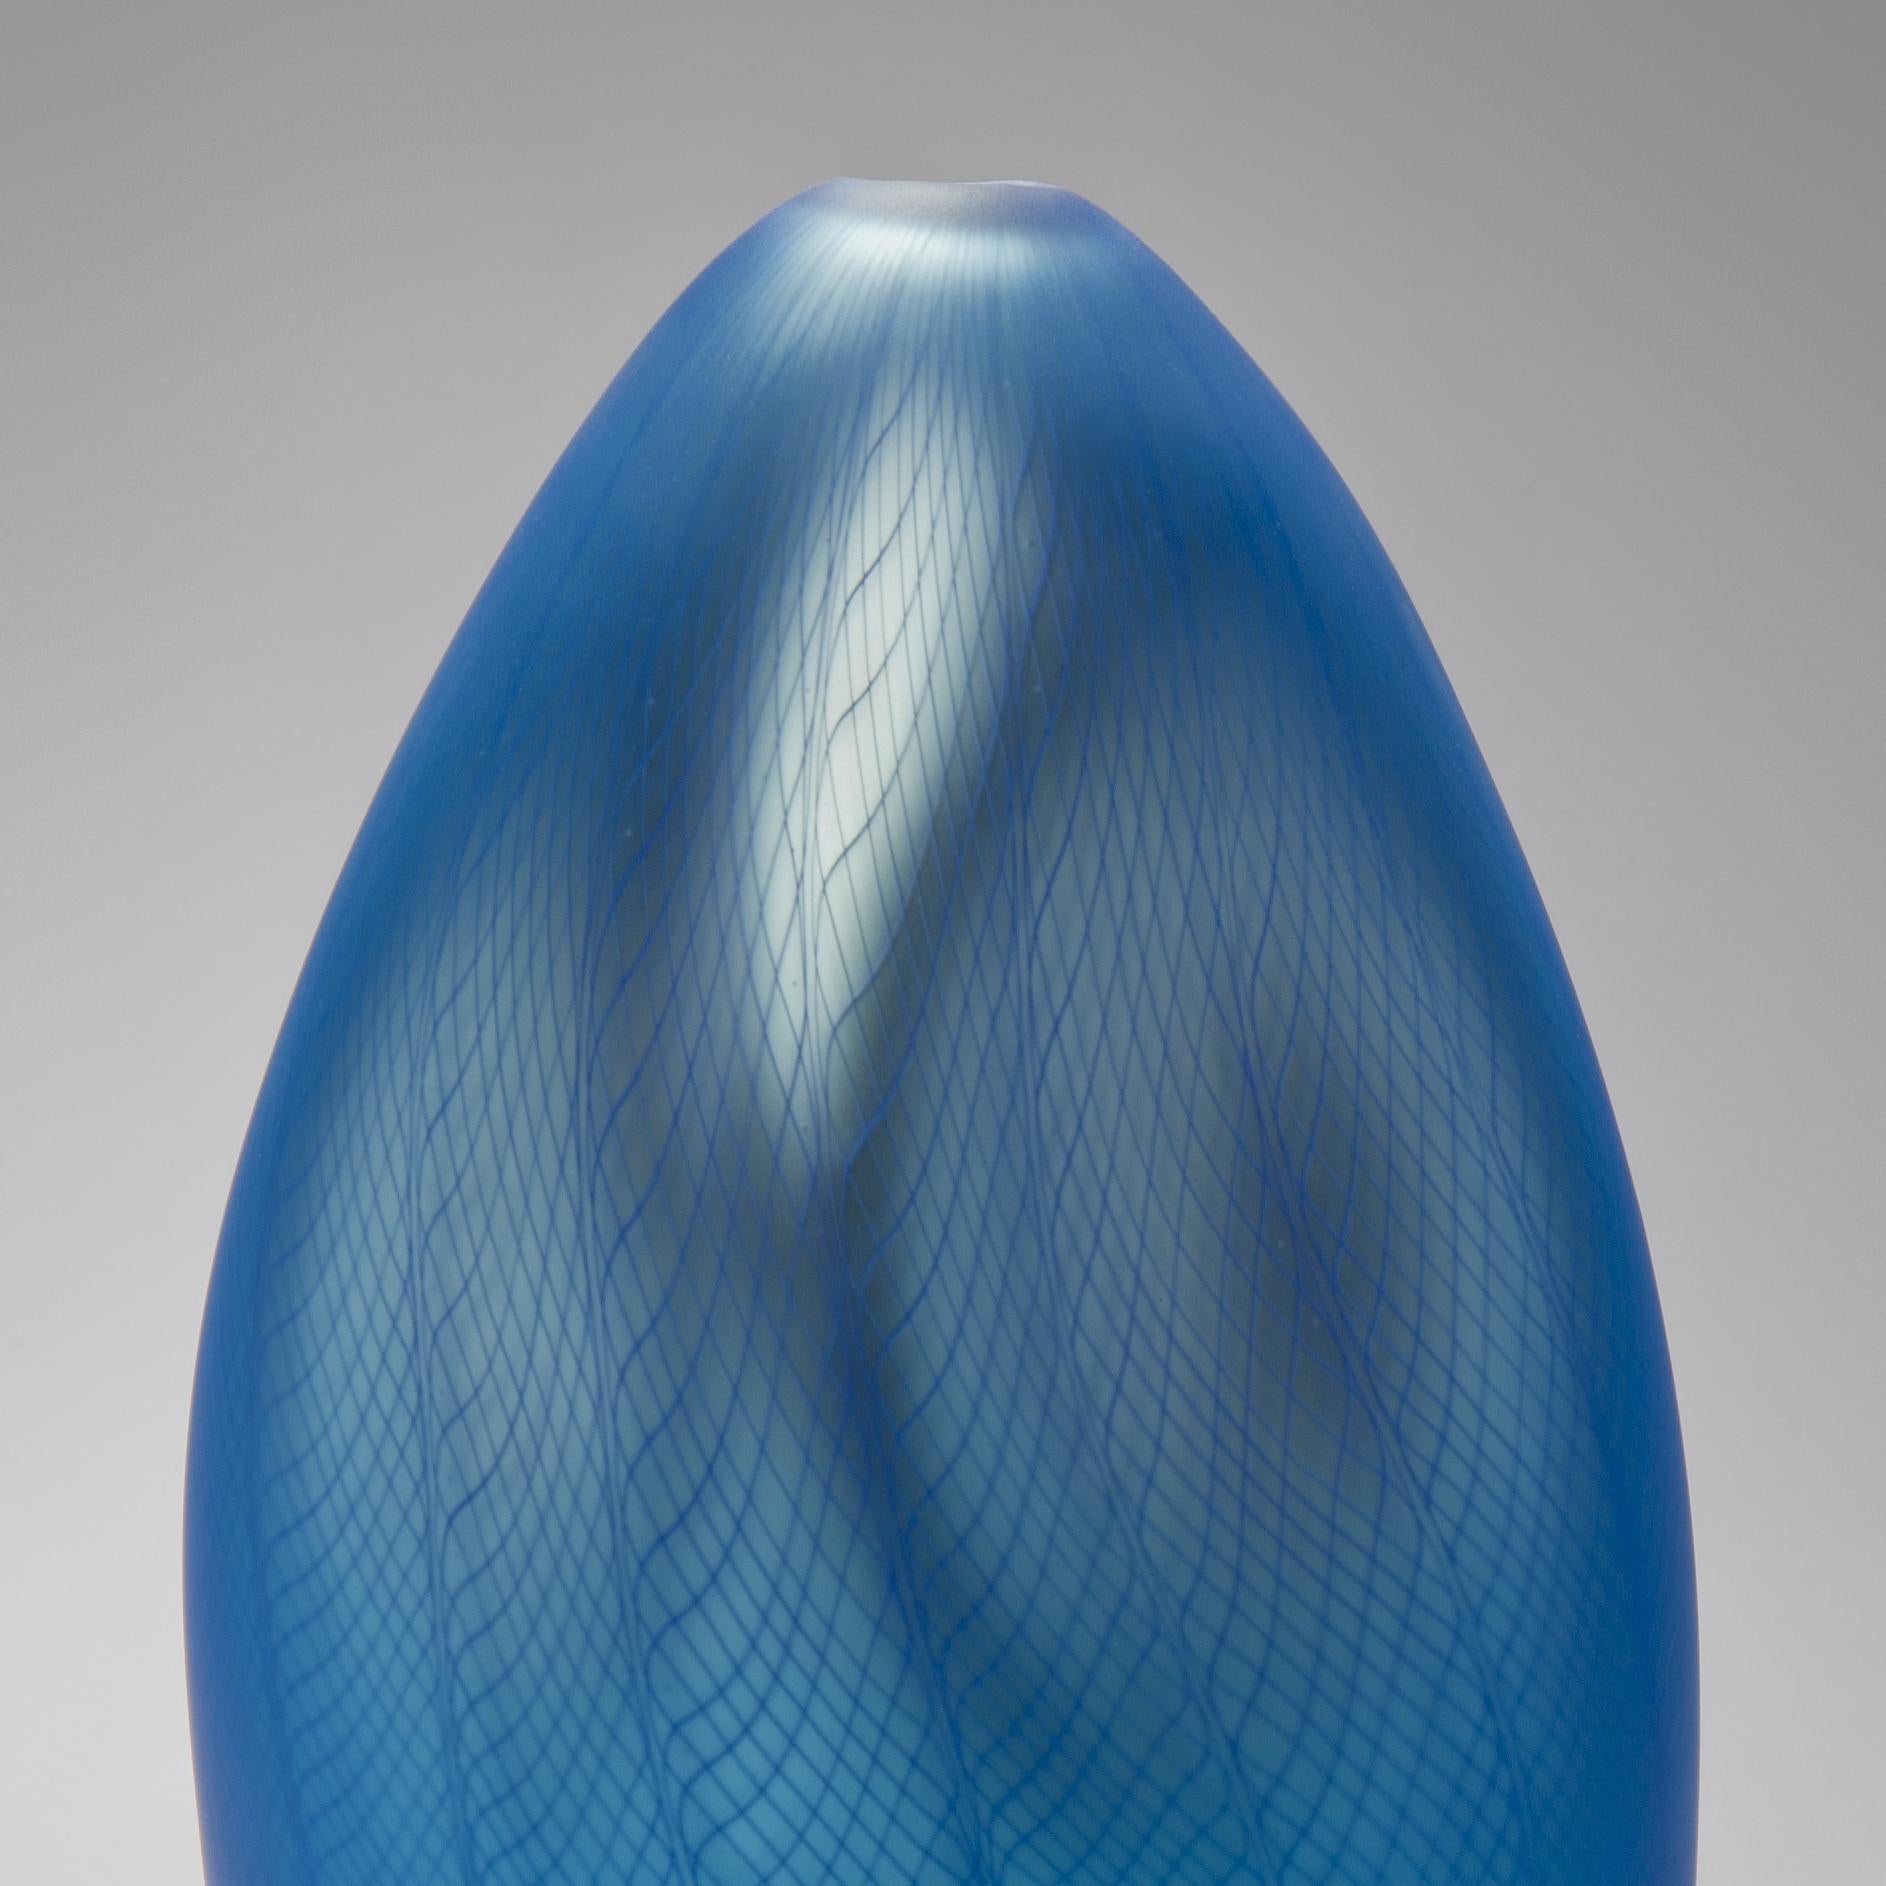 Organic Modern Stratiform Caeruleus 1.0.001, Glass Sculpture in Aqua by Liam Reeves For Sale